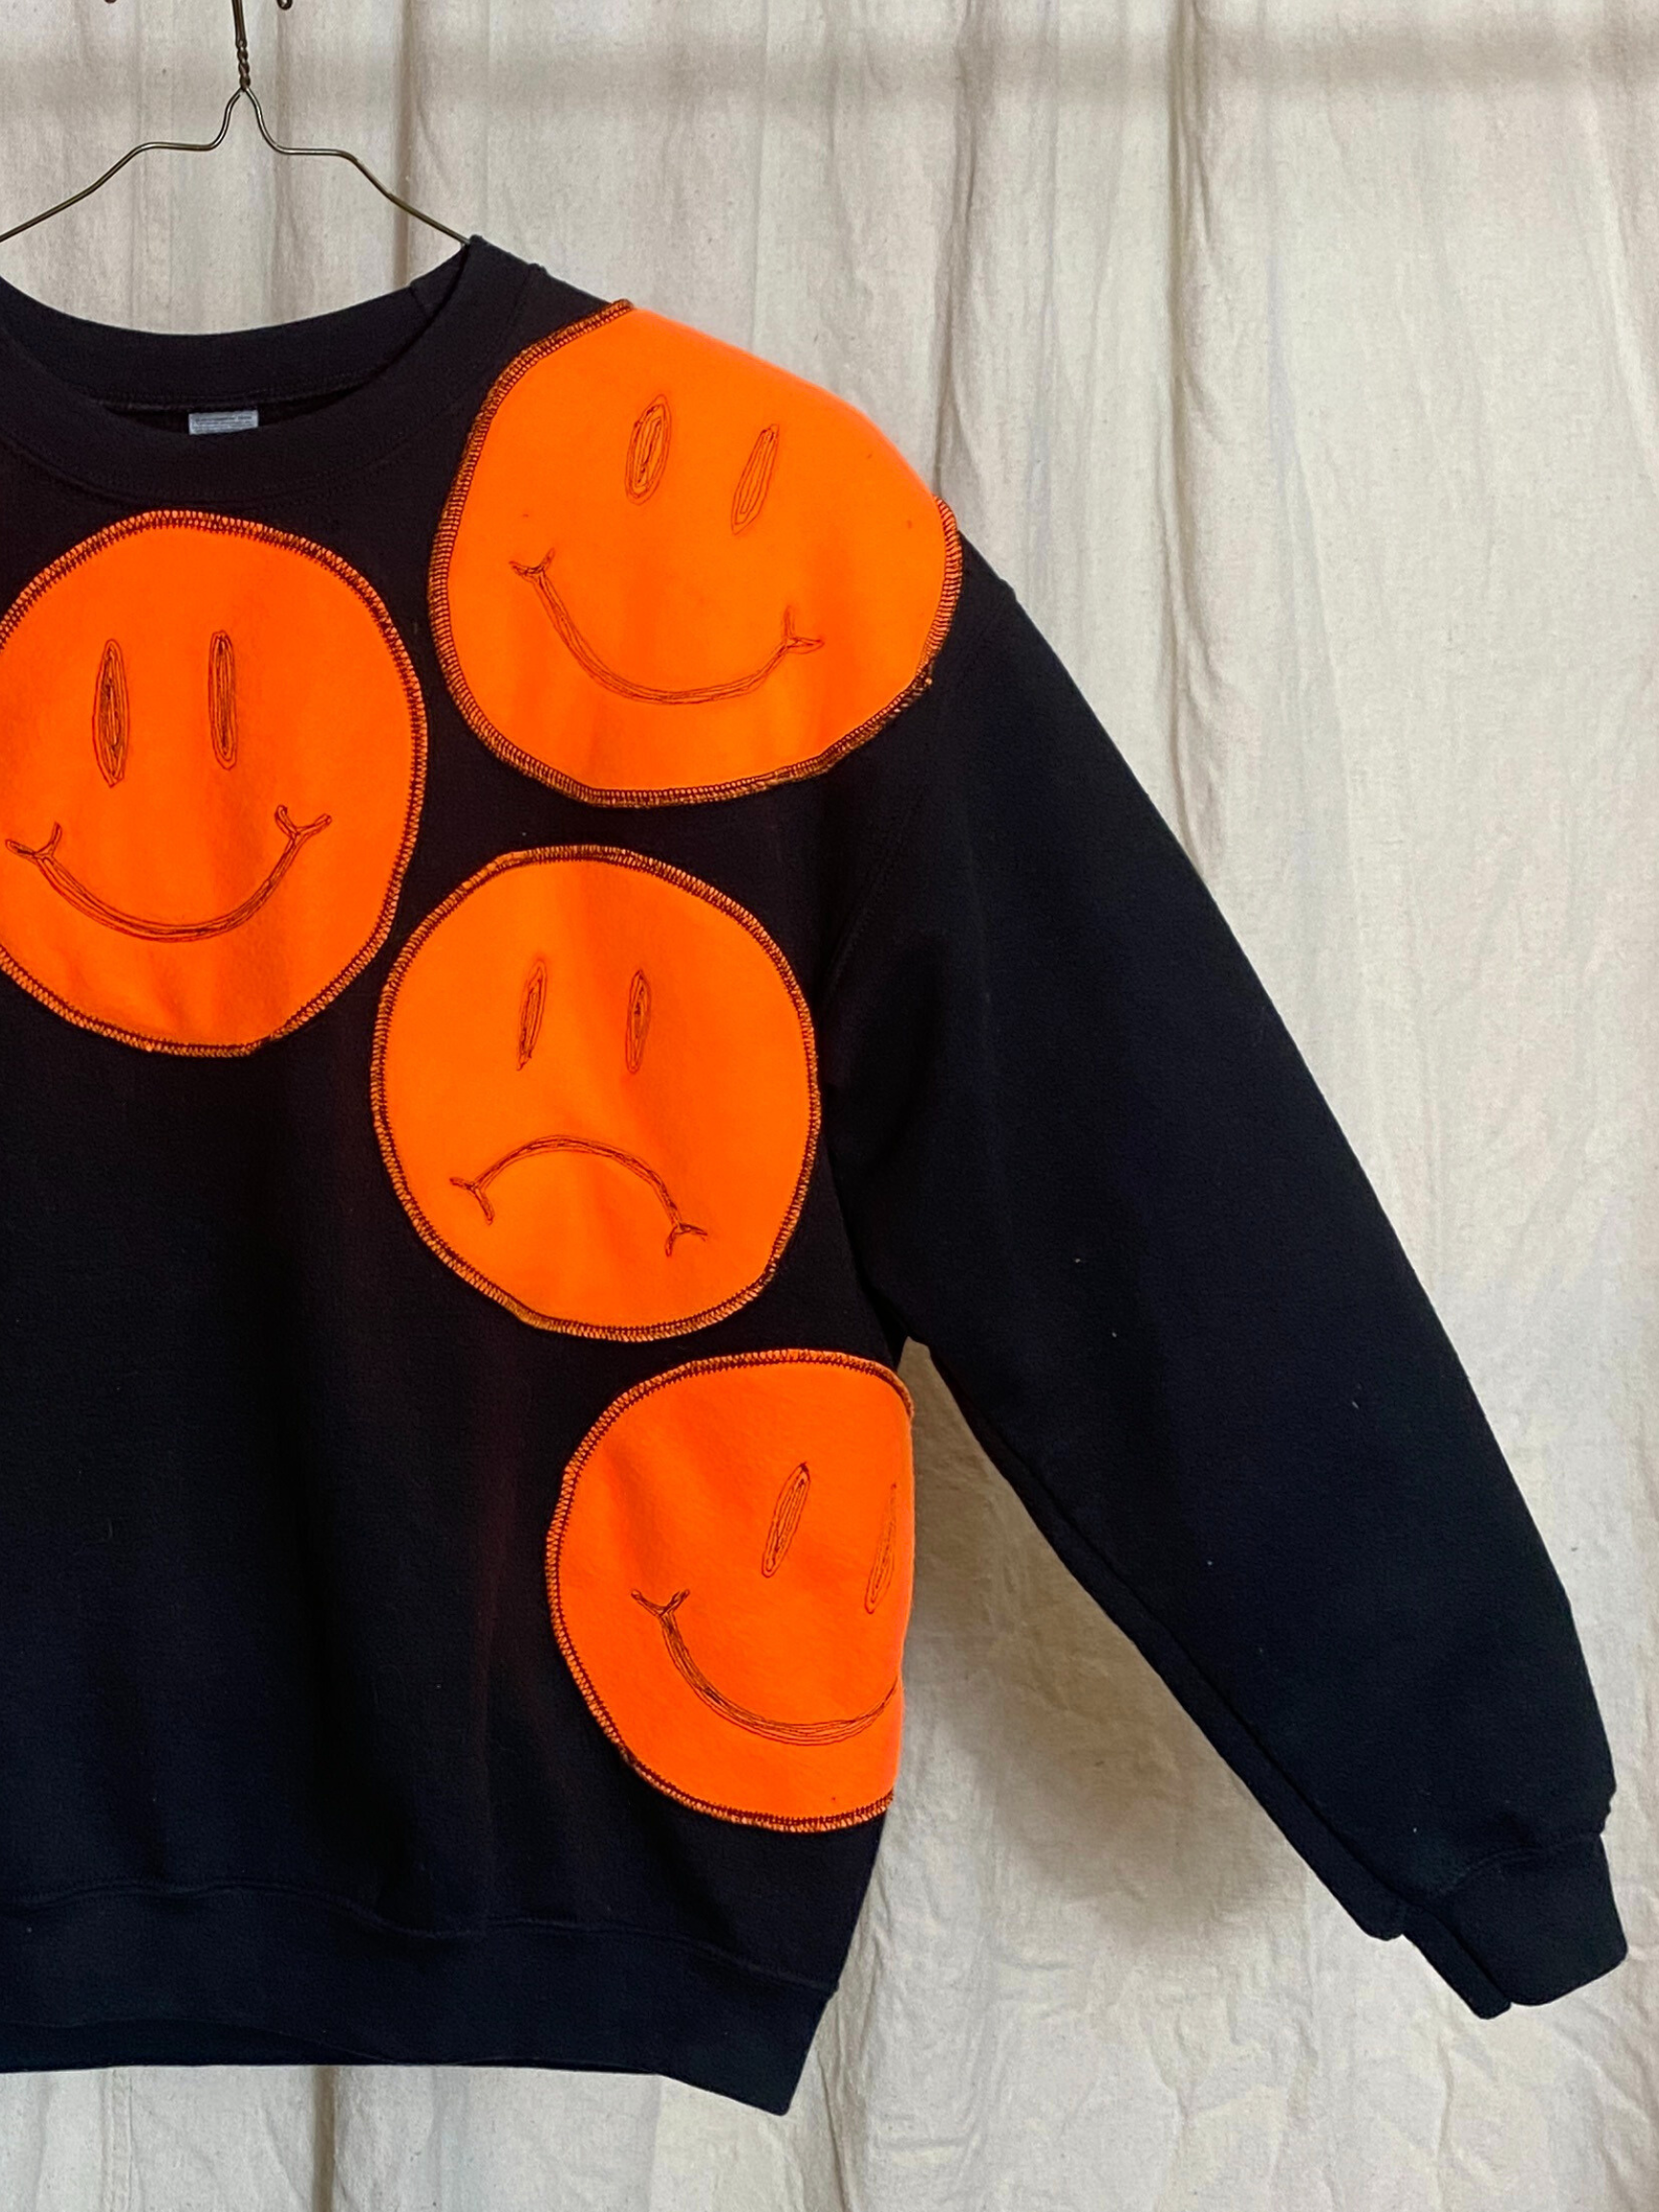 Moody Genderless Sweatshirt- Black Crewneck with Orange Fleece Patches of Smiley Faces